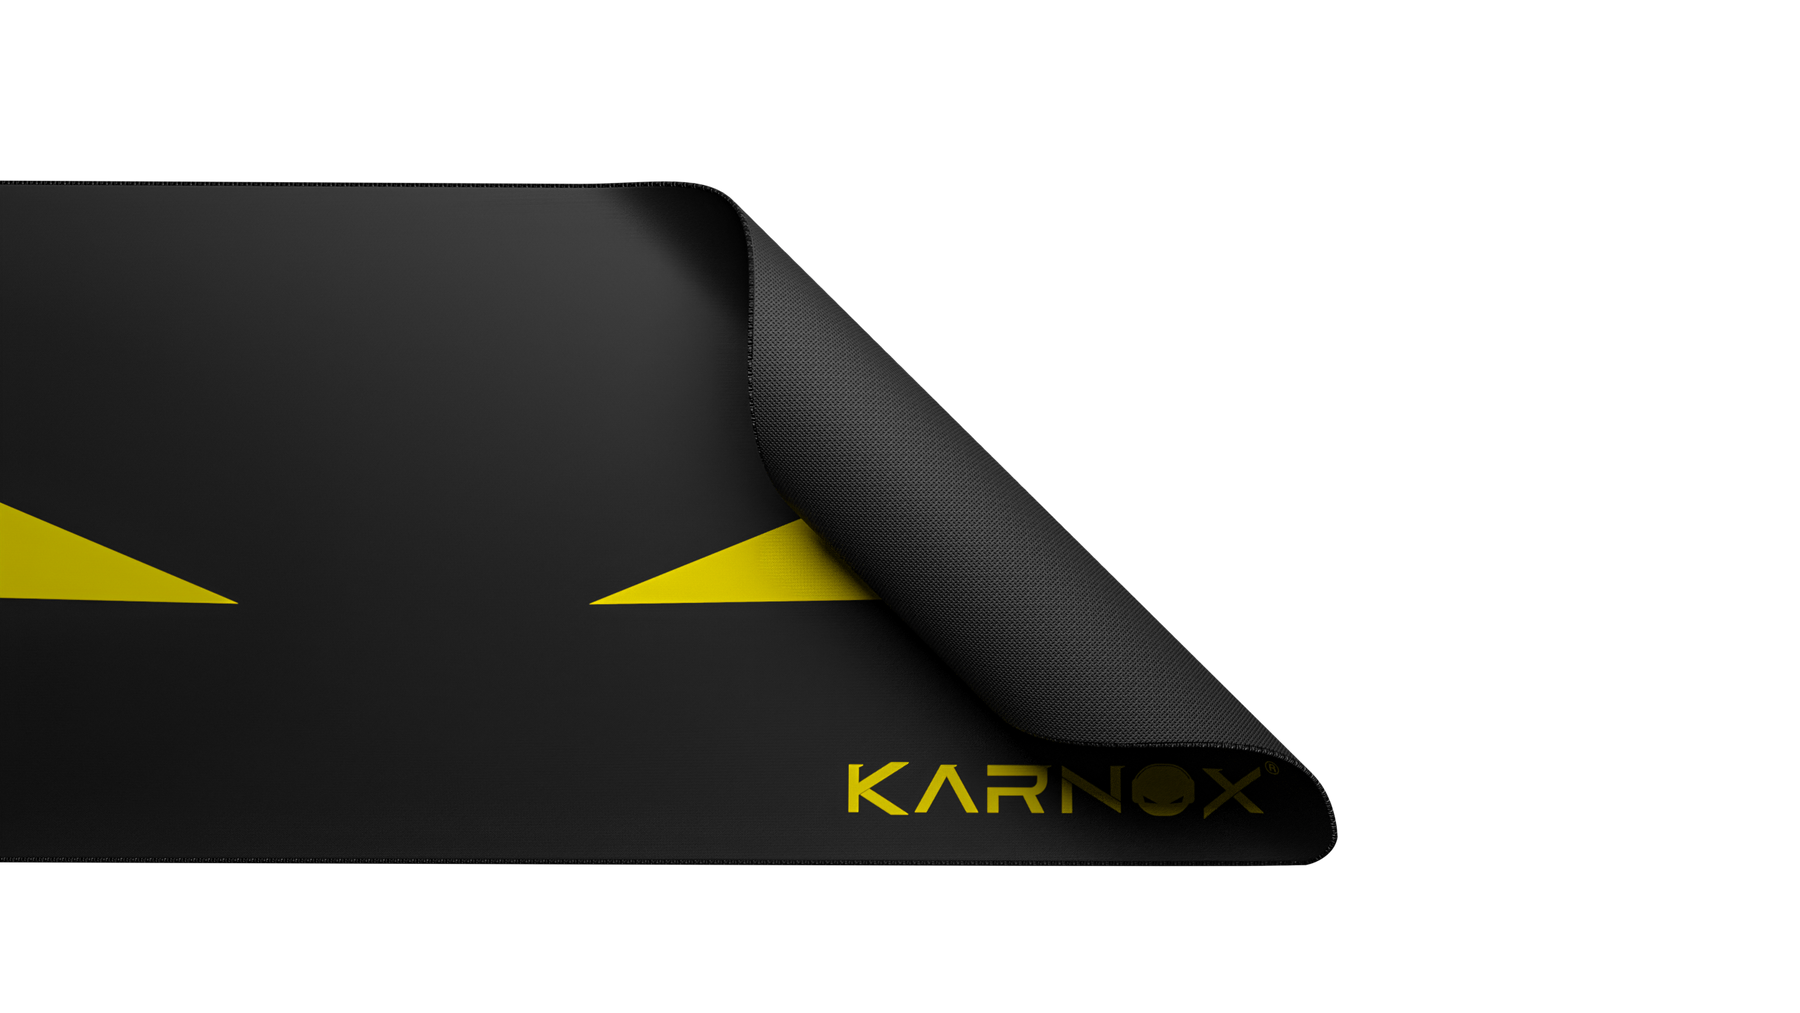 Karnox Gaming Keyboard & Mouse Pad